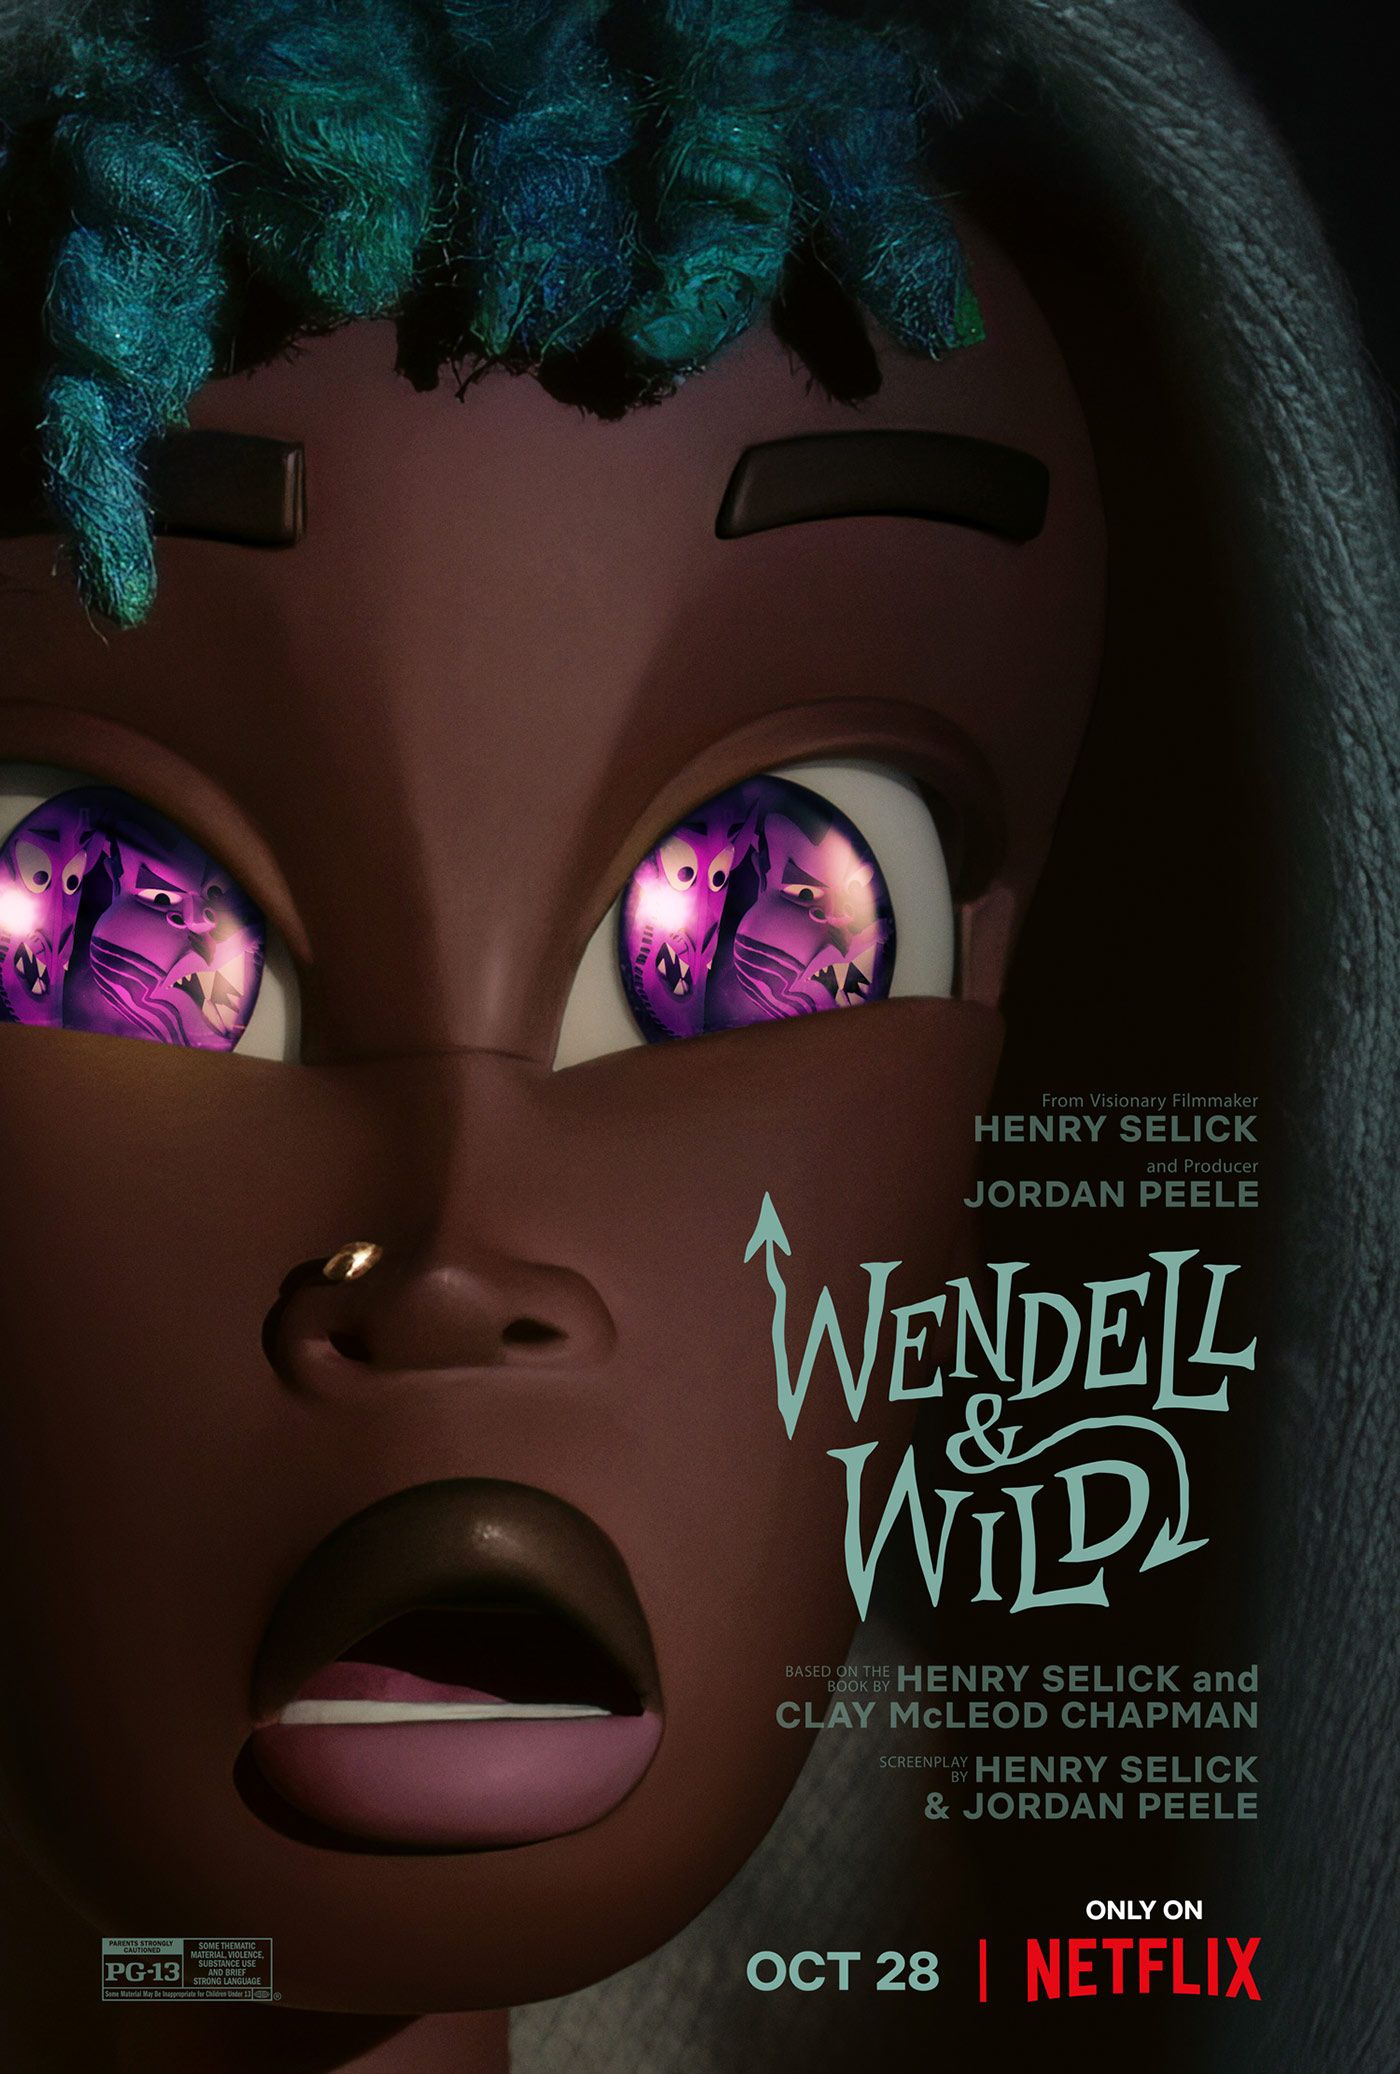 Wendell-and-Wild-poster-netflix-2